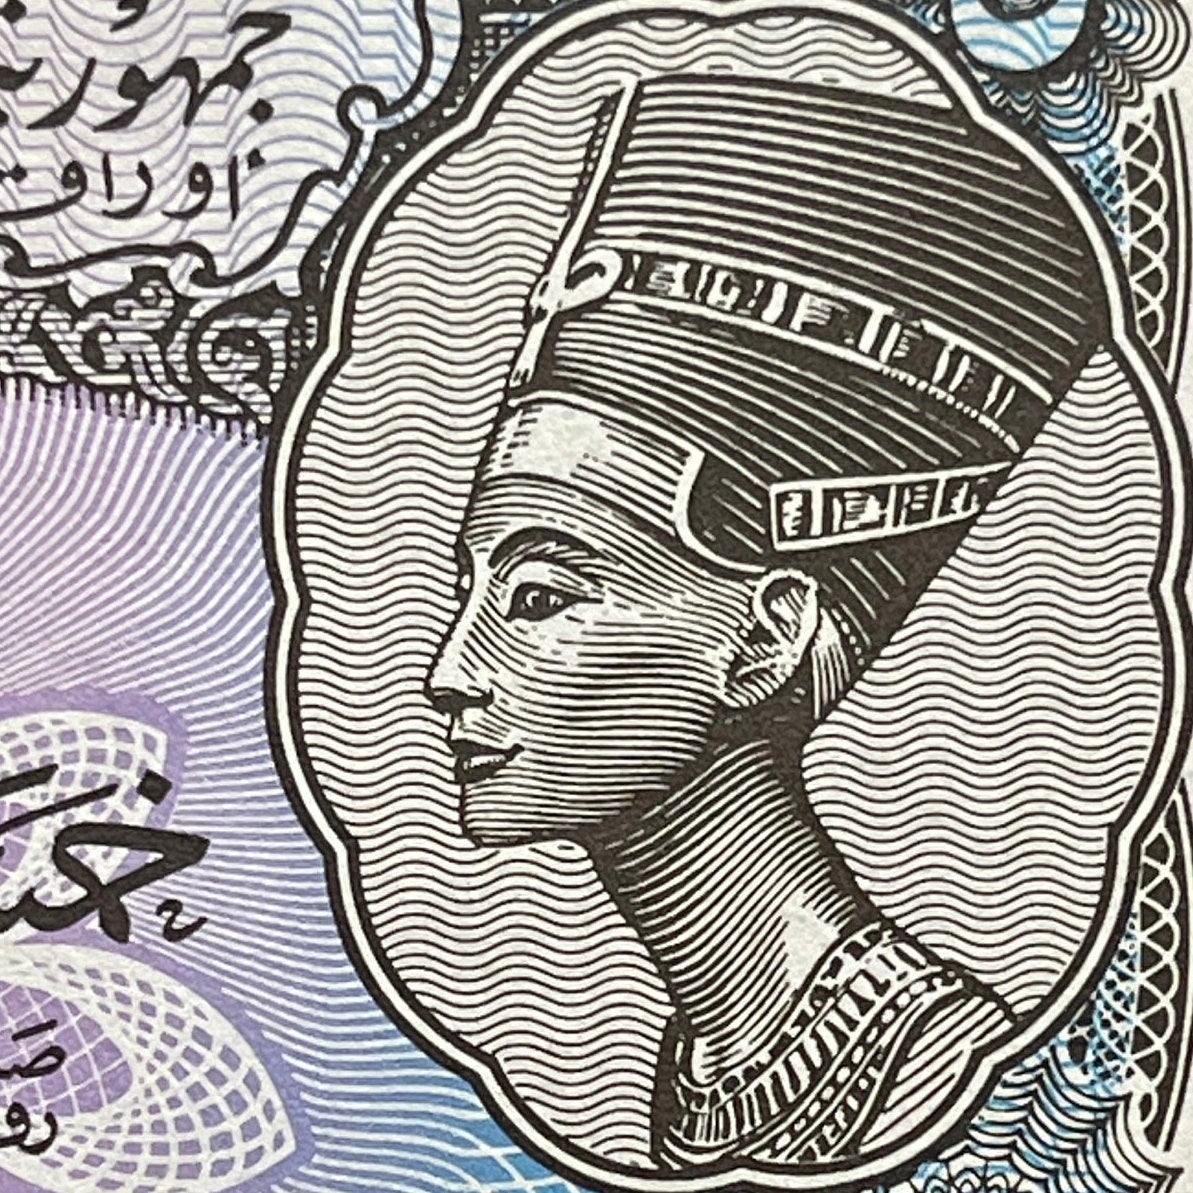 Queen Nefertiti & King Tutankhamen 5 Piastres Egypt Authentic Banknote Money for Jewelry Collage (Thutmose) (King Tut)